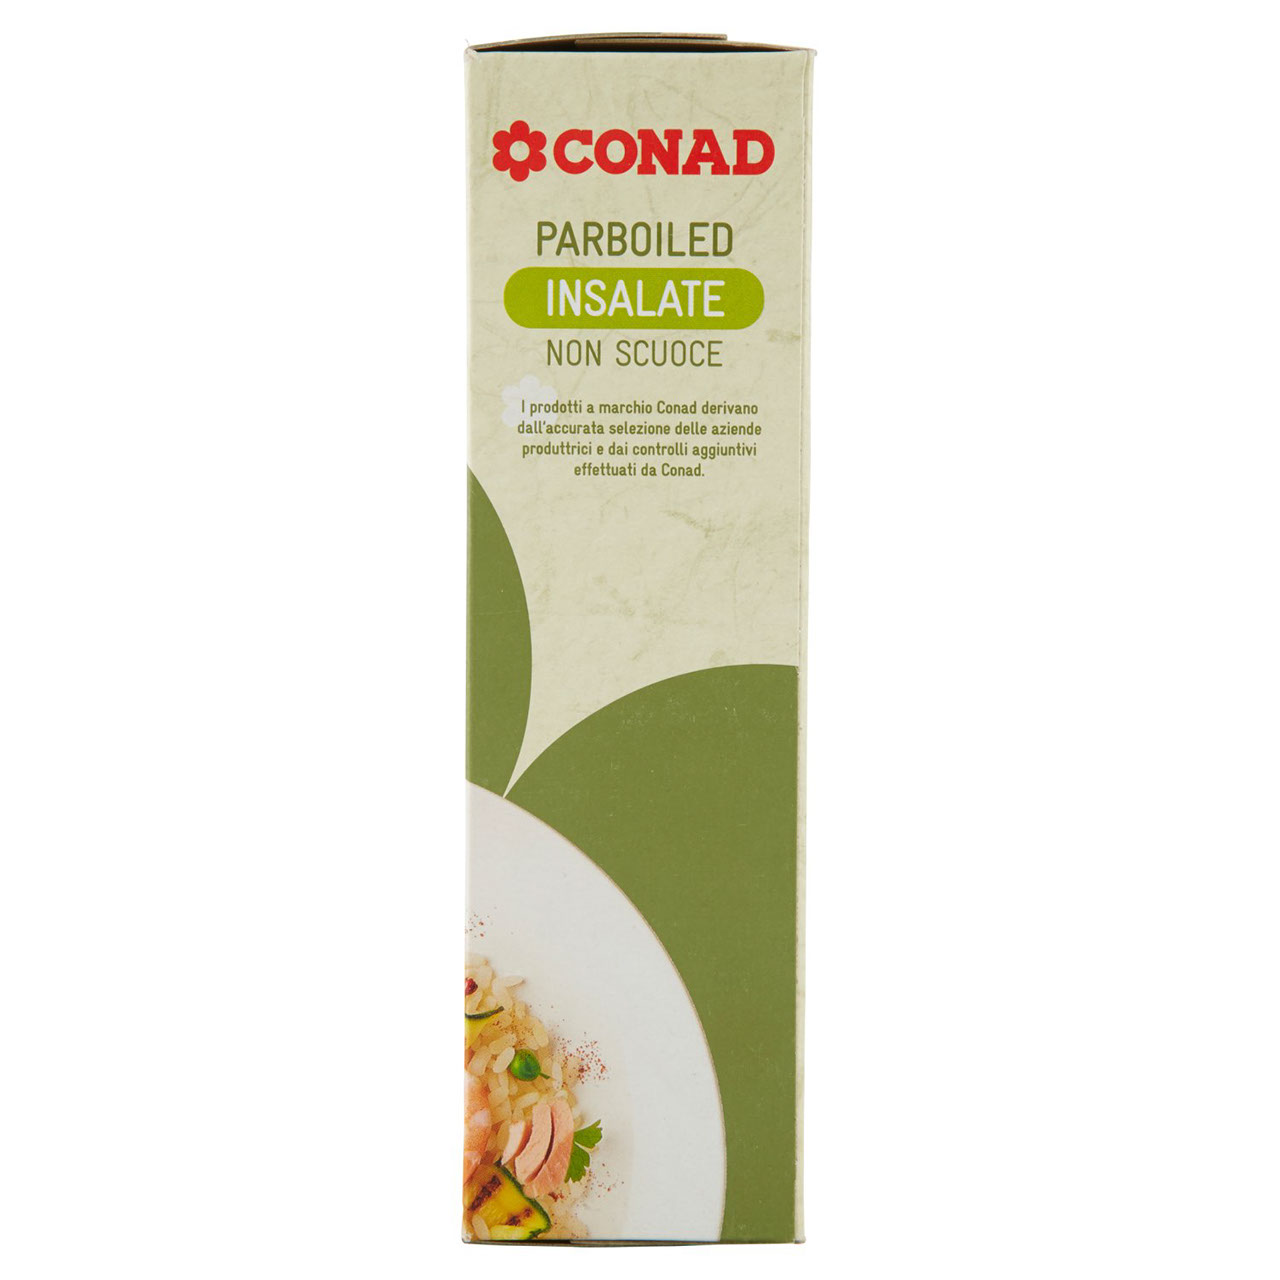 Parboiled insalate kg 1 Conad in vendita online